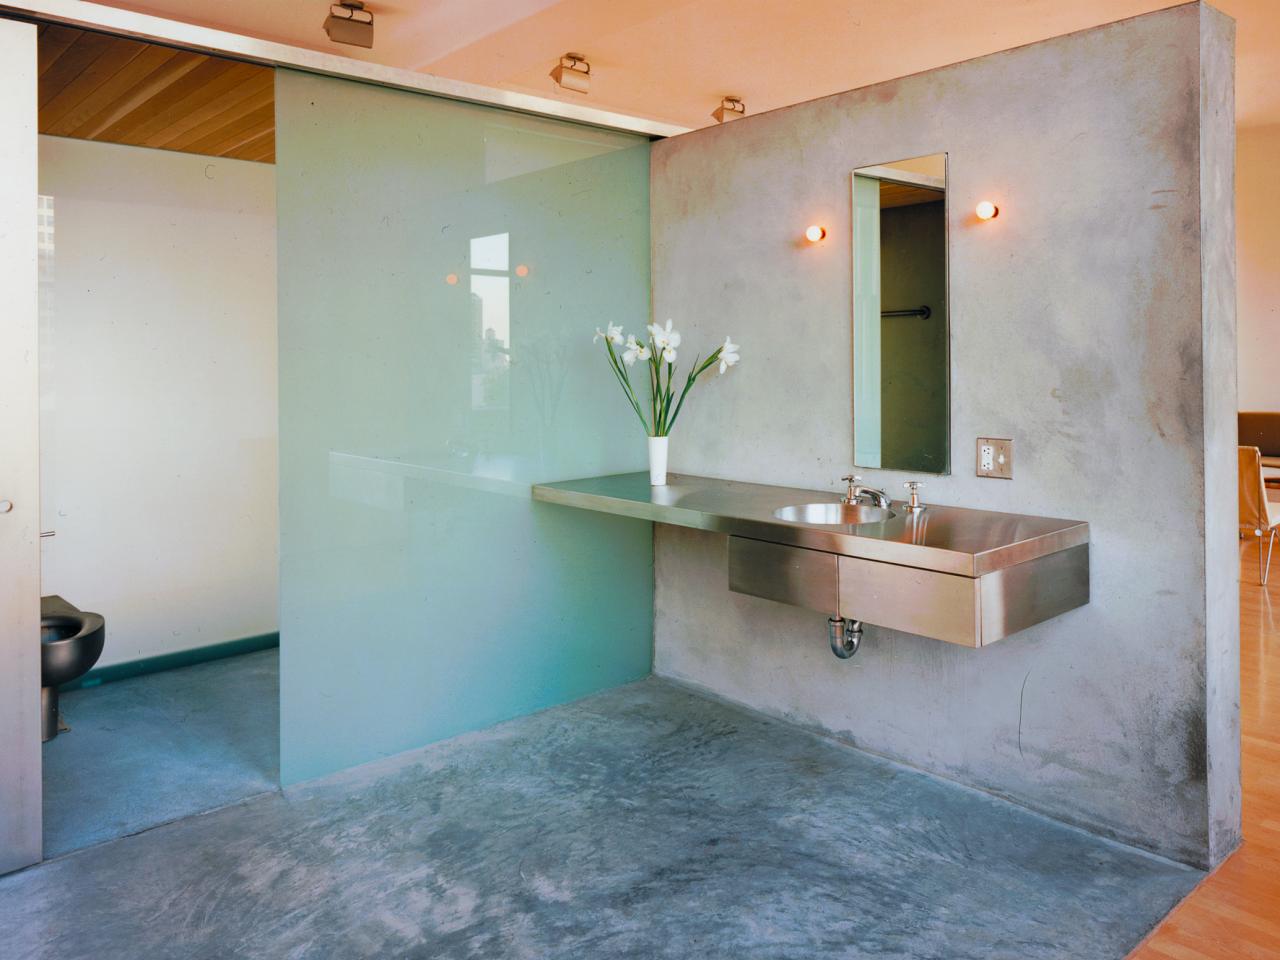 bathroom modern concrete bathrooms hgtv industrial minimalist floor bath looks urban freeman floors universal space spaces wet takes designer honed